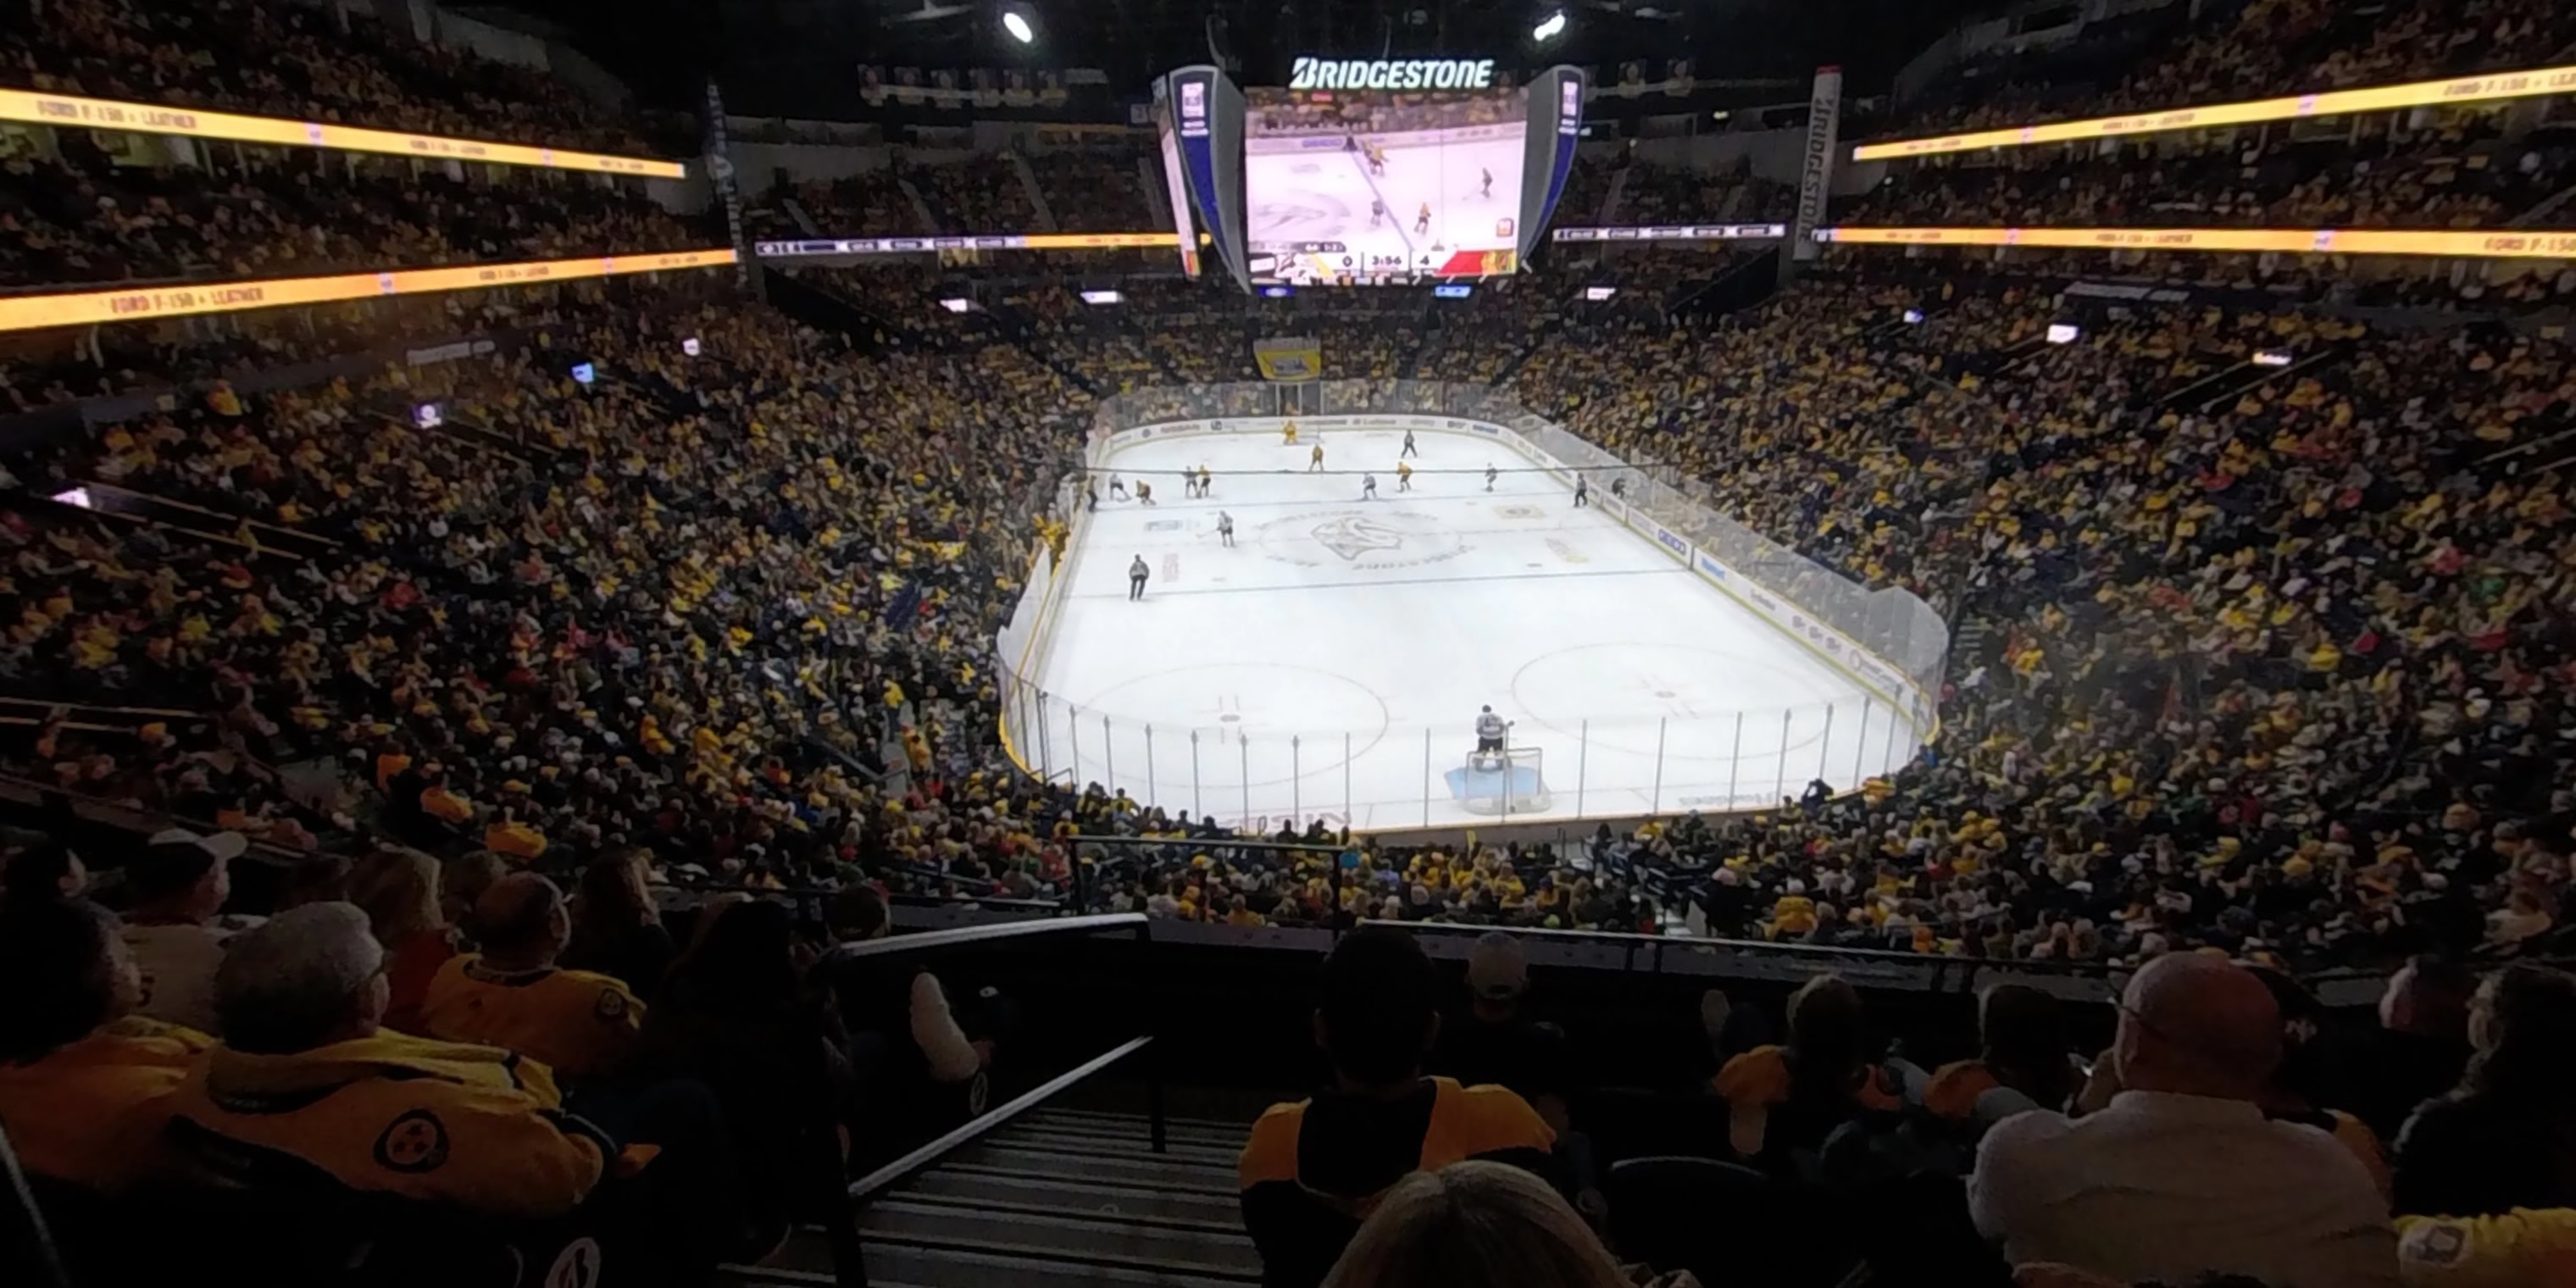 section 223 panoramic seat view  for hockey - bridgestone arena